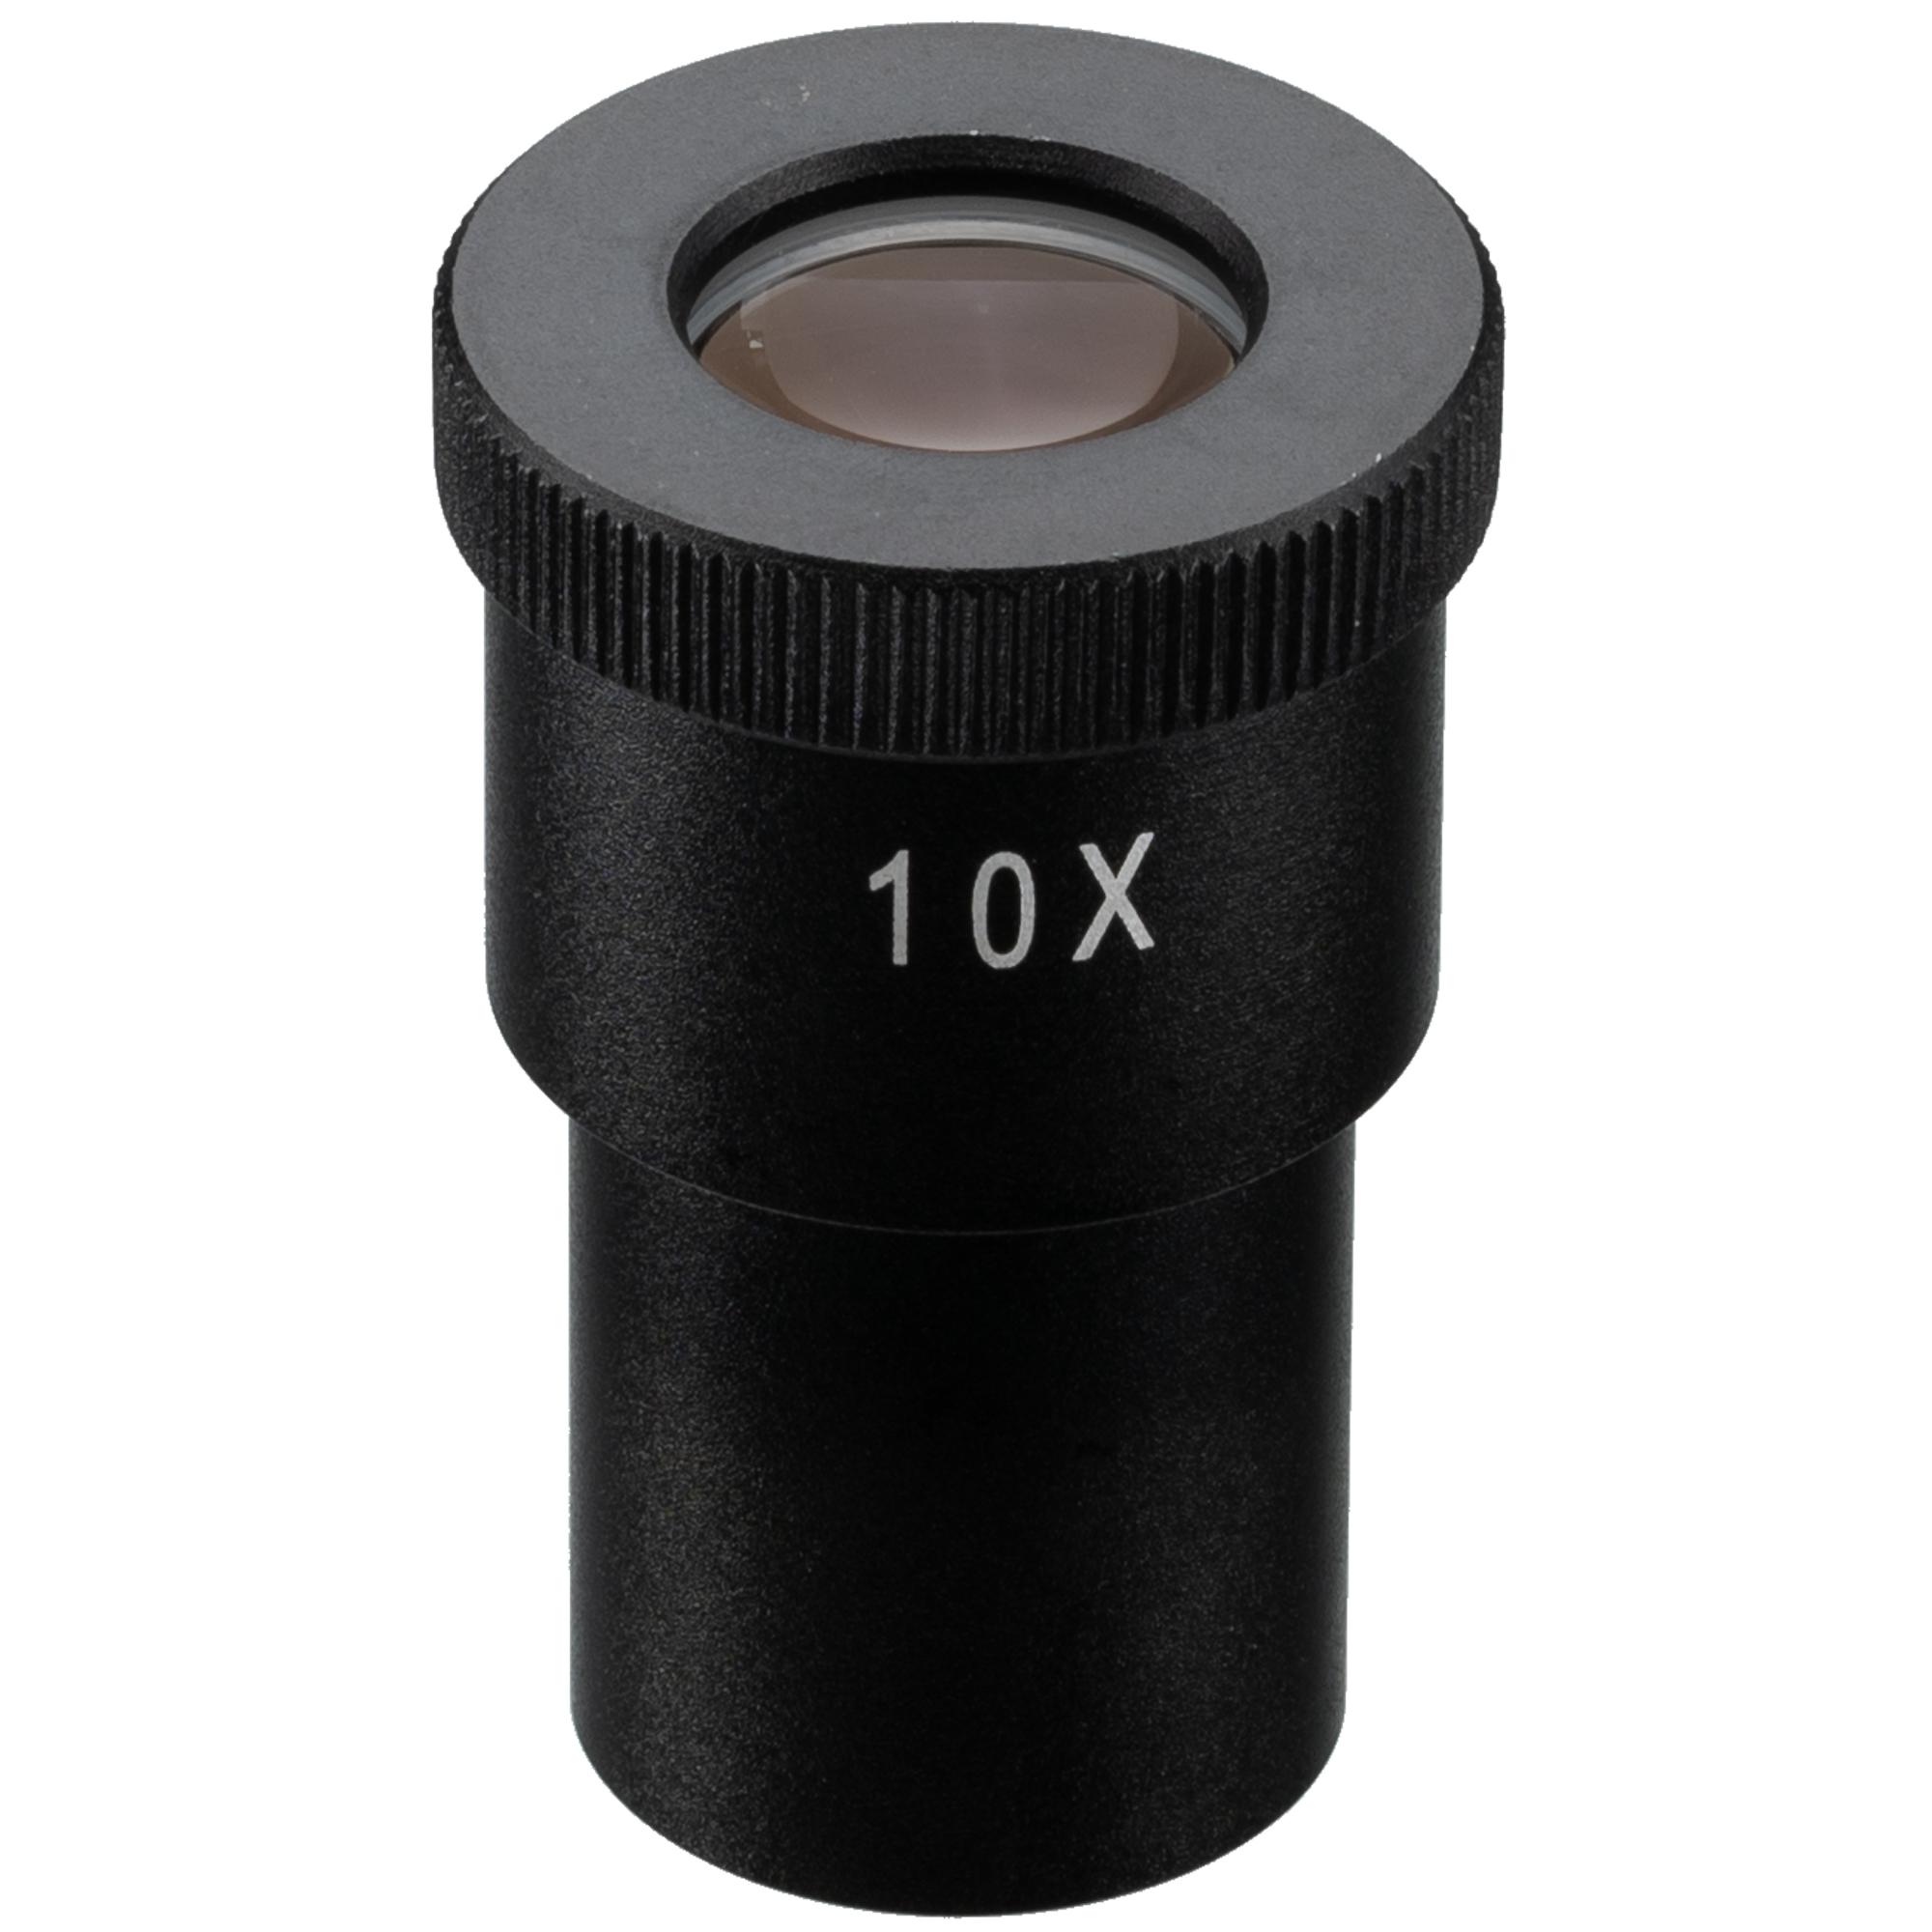 BRESSER WF10x 23mm Eyepiece Micrometer